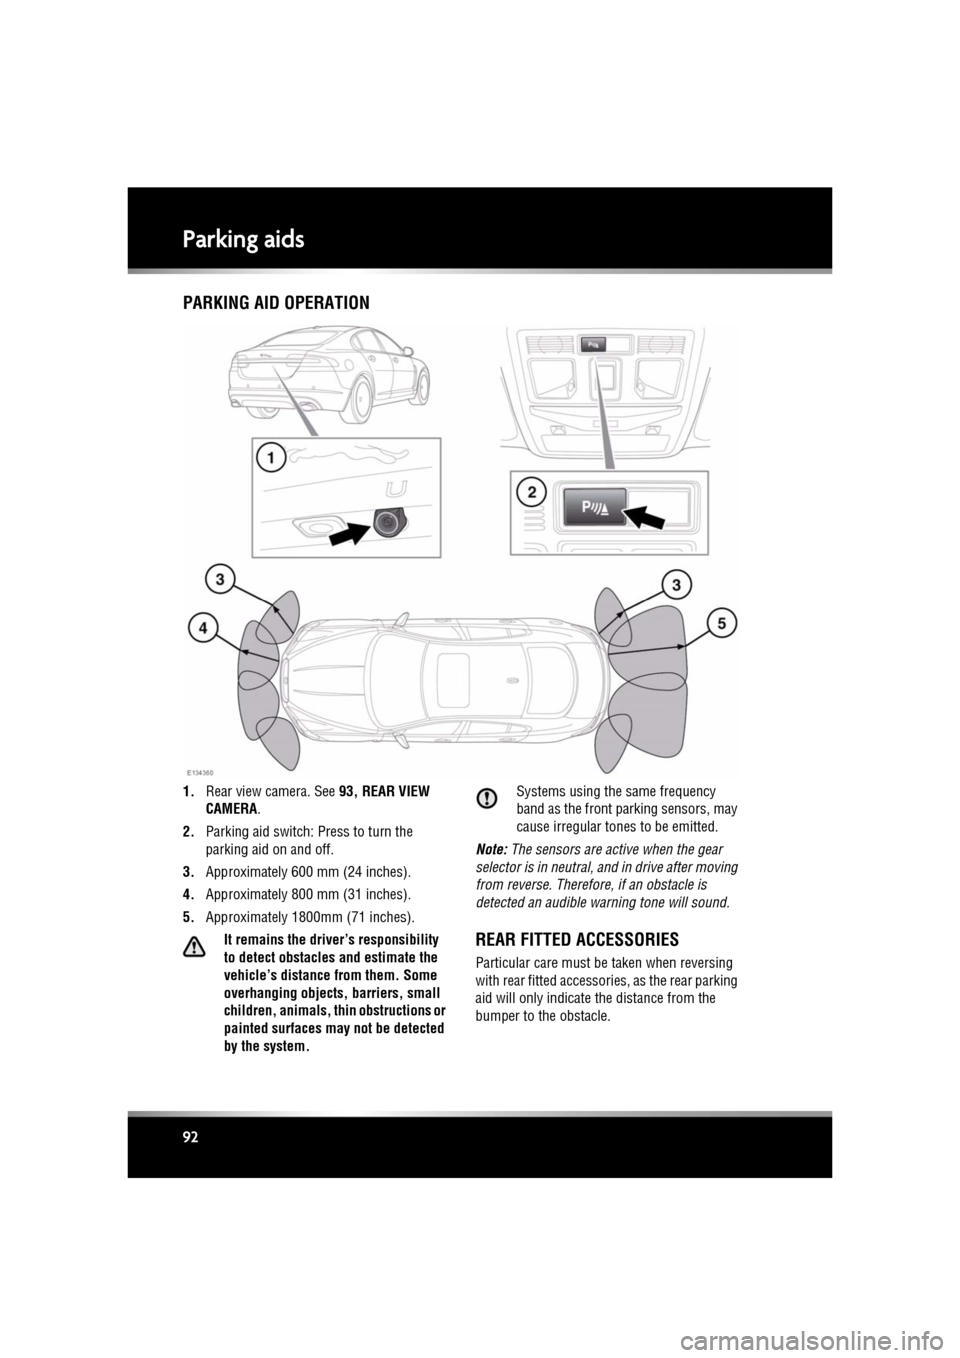 JAGUAR XF 2011 1.G Owners Manual L
(FM8) SEMCON JLR OWNER GUIDE VER 1.00  EURO
LANGUAGE: english-en; MARQUE: jaguar; MODEL: XF
Parking aids
92
Parking aidsPARKING AID OPERATION
1. Rear view camera. See  93, REAR VIEW 
CAMERA .
2. Par